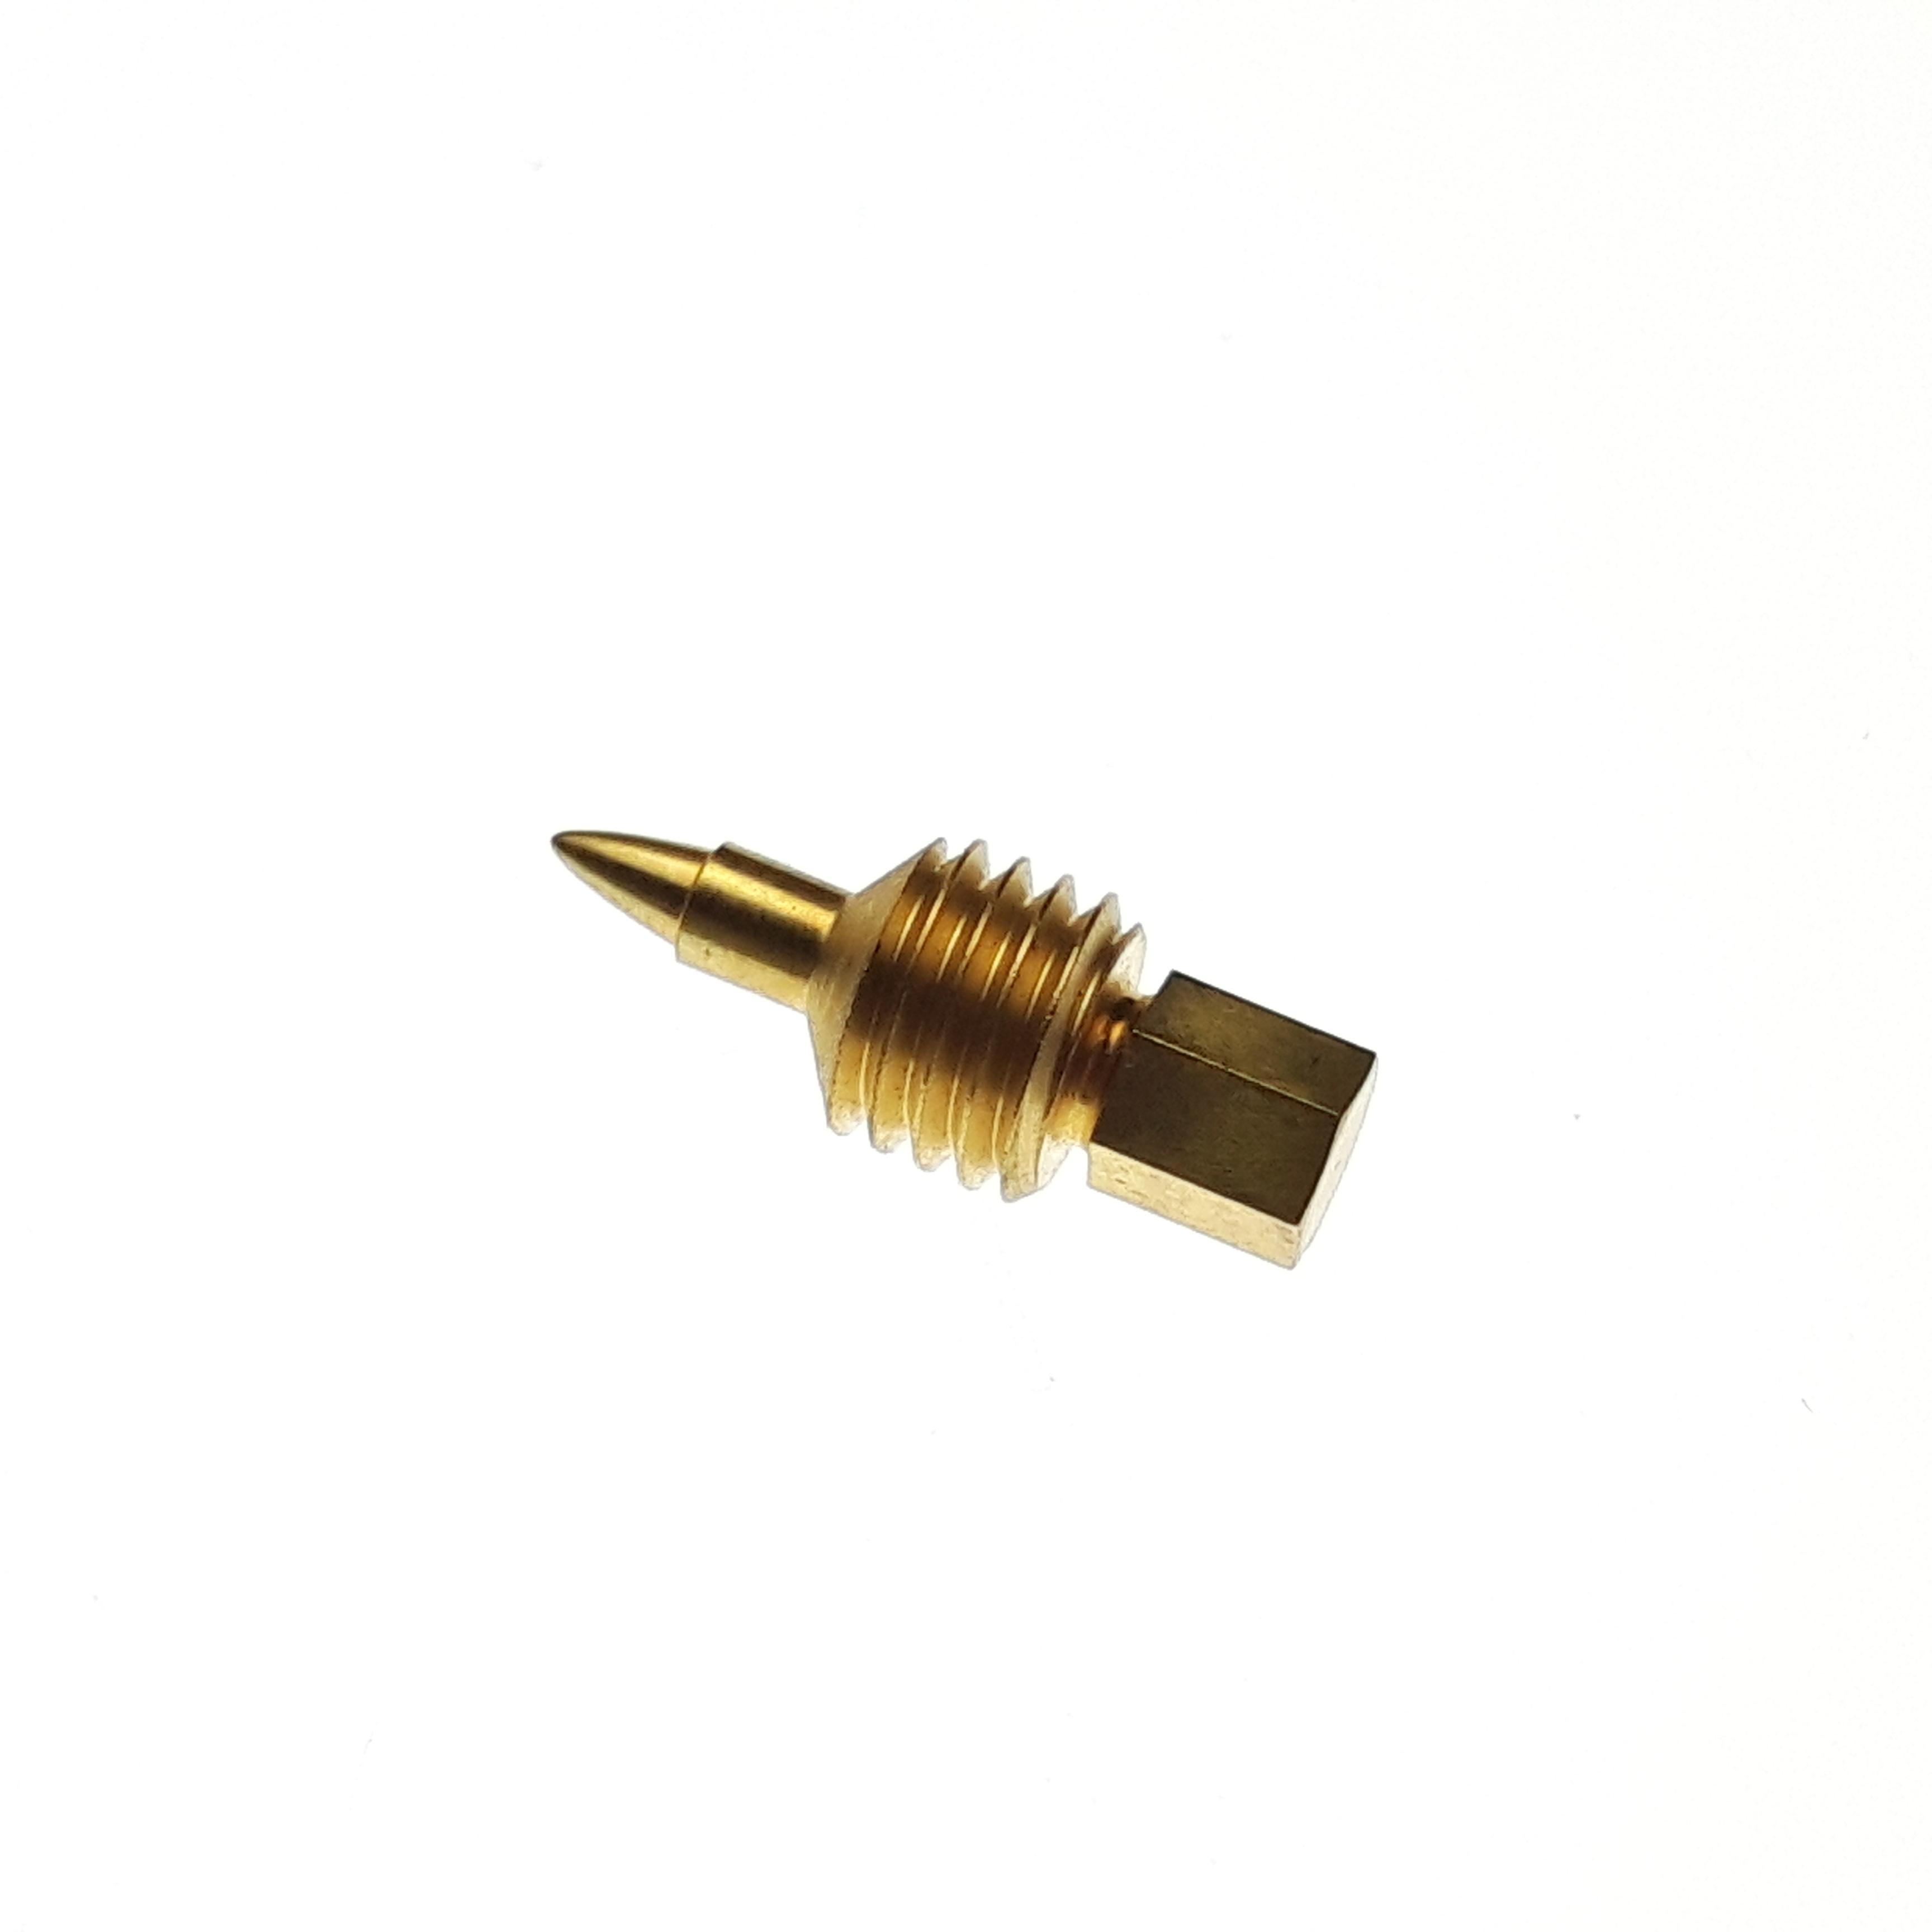 Obrázek produktu Damping Adjust Part: Low Speed Needle [1/4-28 UNF-2A] Brass, DSC Adjuster 210-35-016